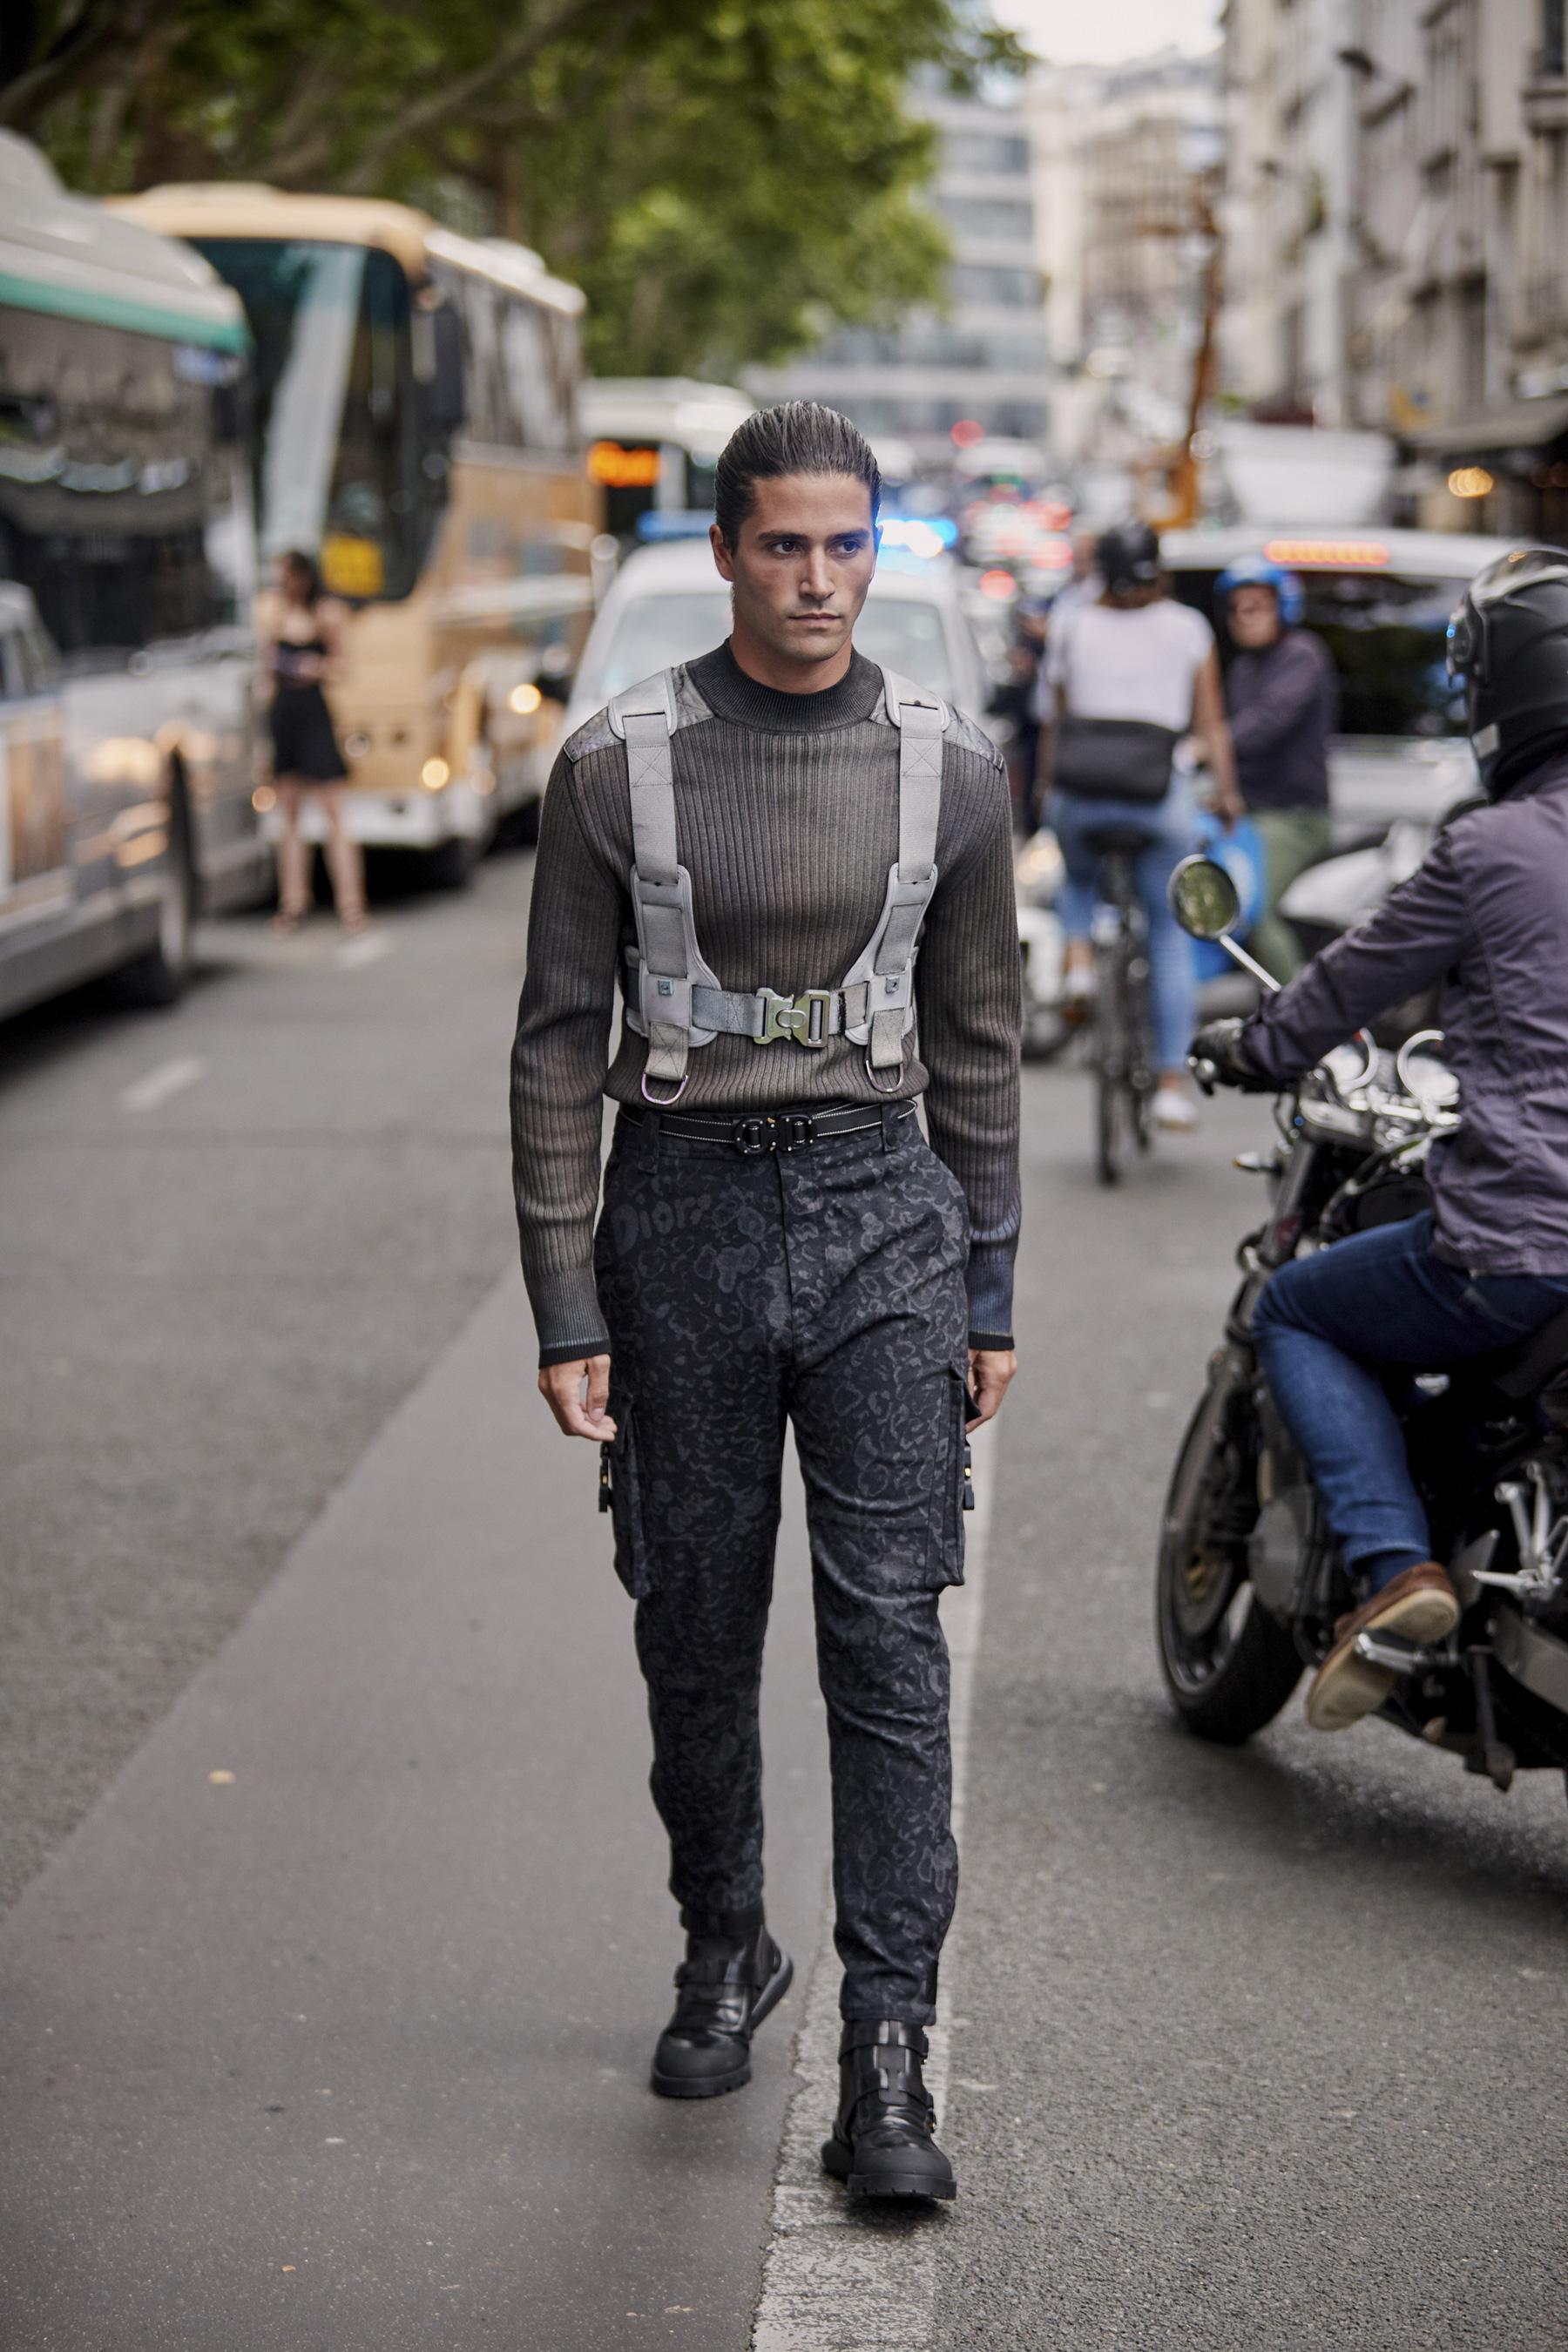 men harness - Google Search  Mens street style, Mens fashion